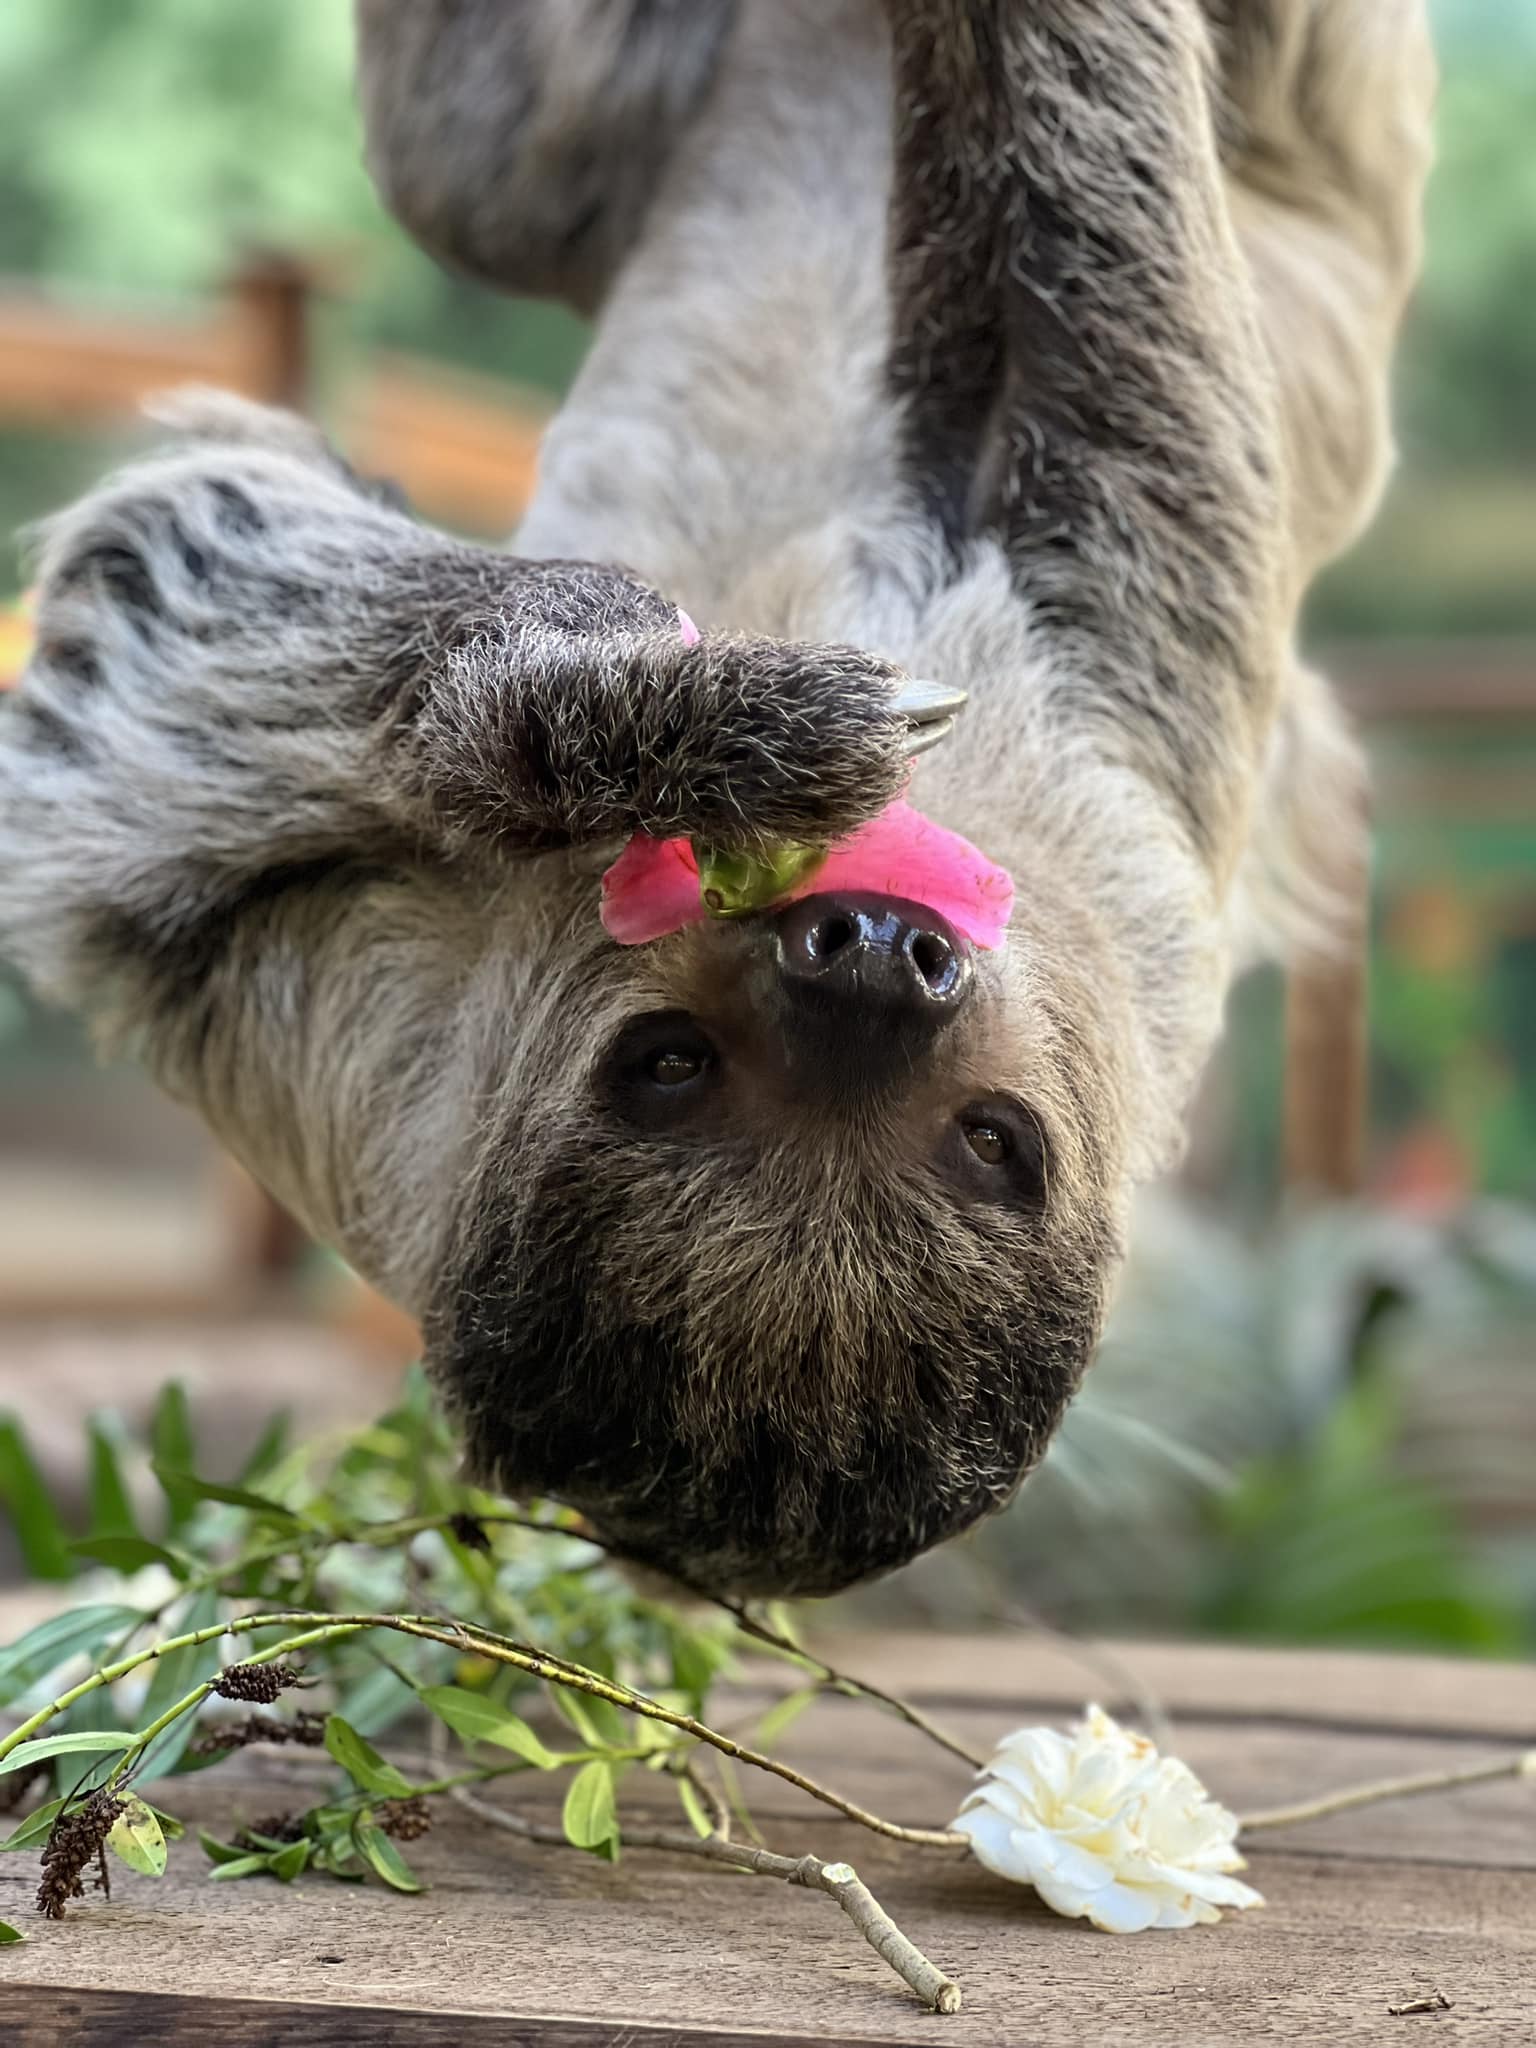 sloth feira hanging upside down eating pink flower IMAGE: RZSS 2023